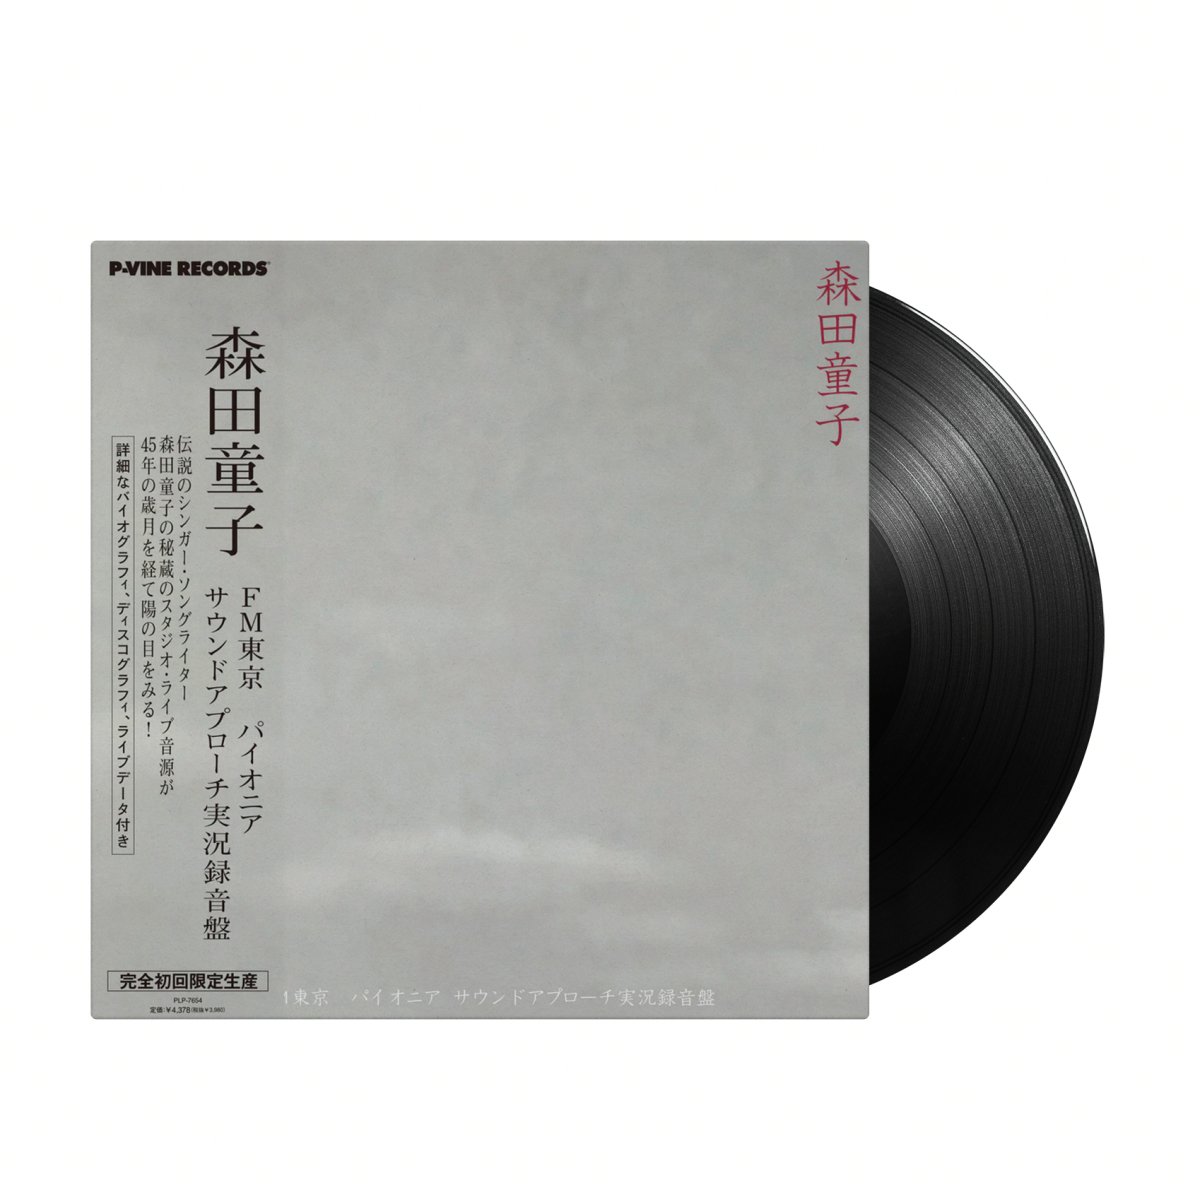 MORITA DOJI - FM Tokyo Pioneer Sound Approach (Japan Import) - Inner Ocean Records